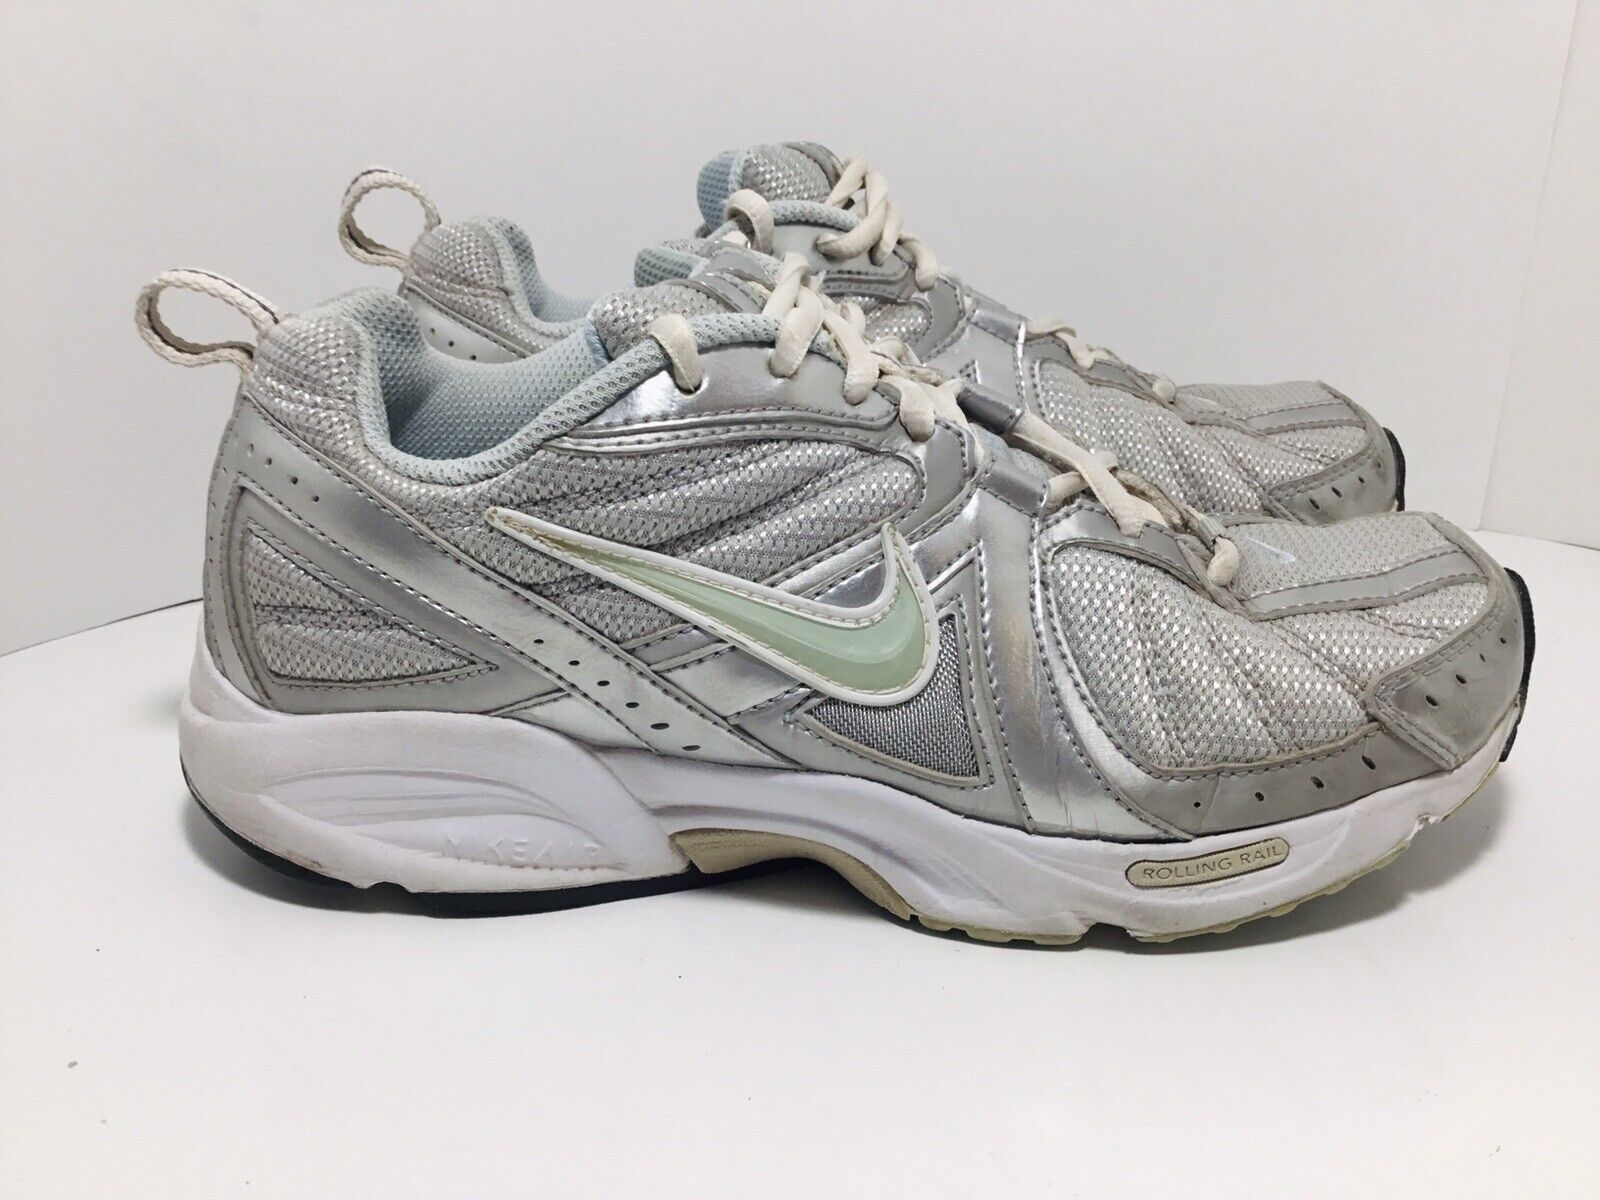 Cerco demostración Productos lácteos Nike Walking Shoes Women's Air Vitality Walk Metallic Silver 350453-041 Sz  7.5 | eBay